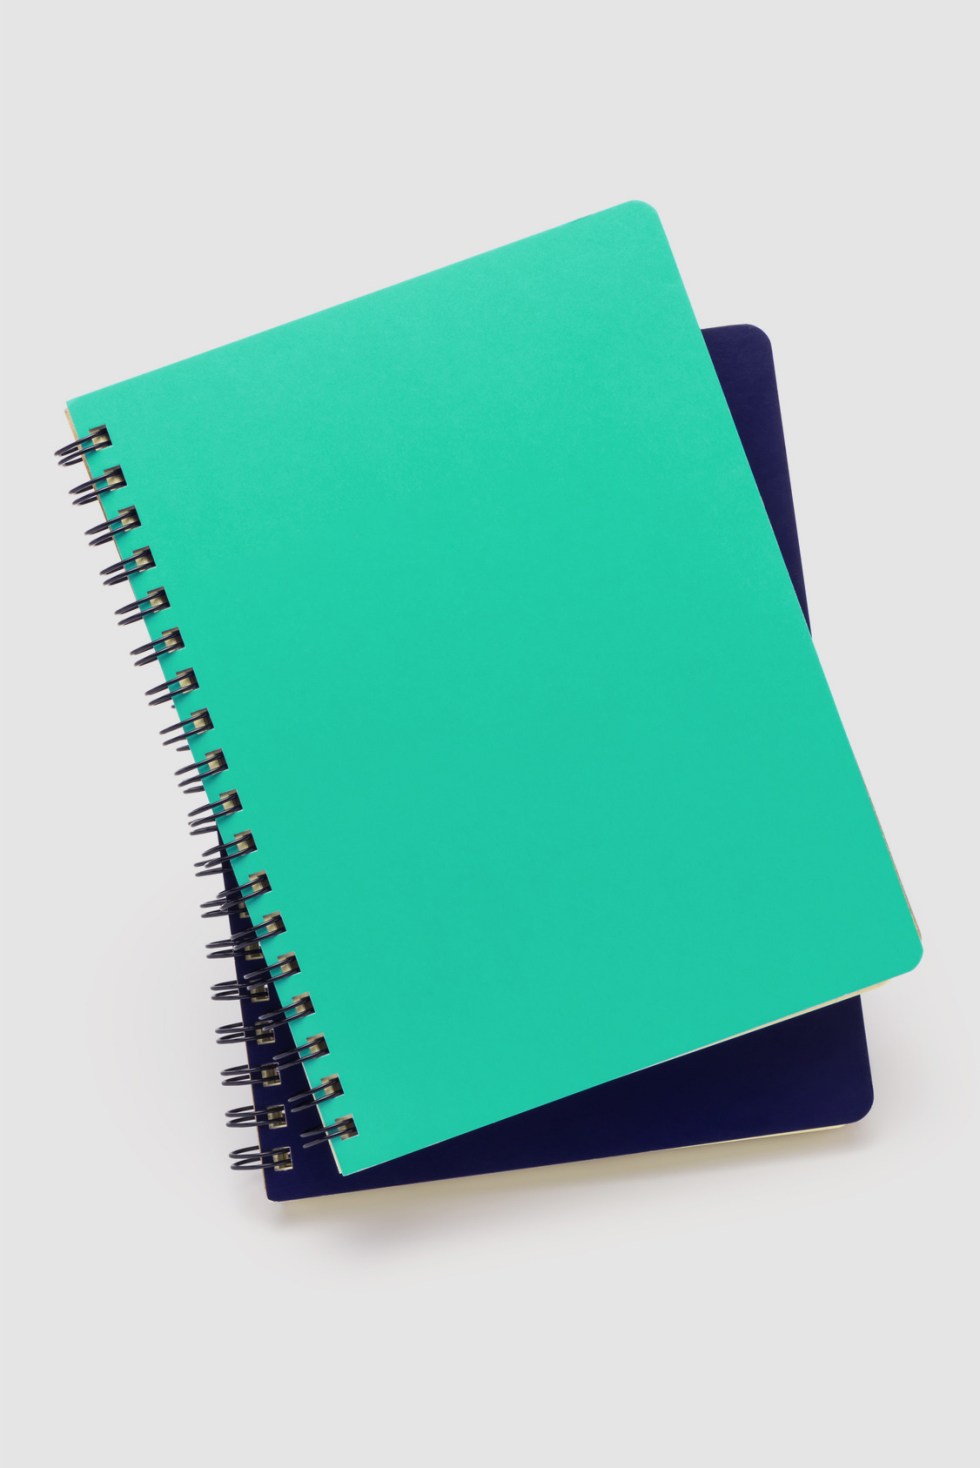 Notebook teal